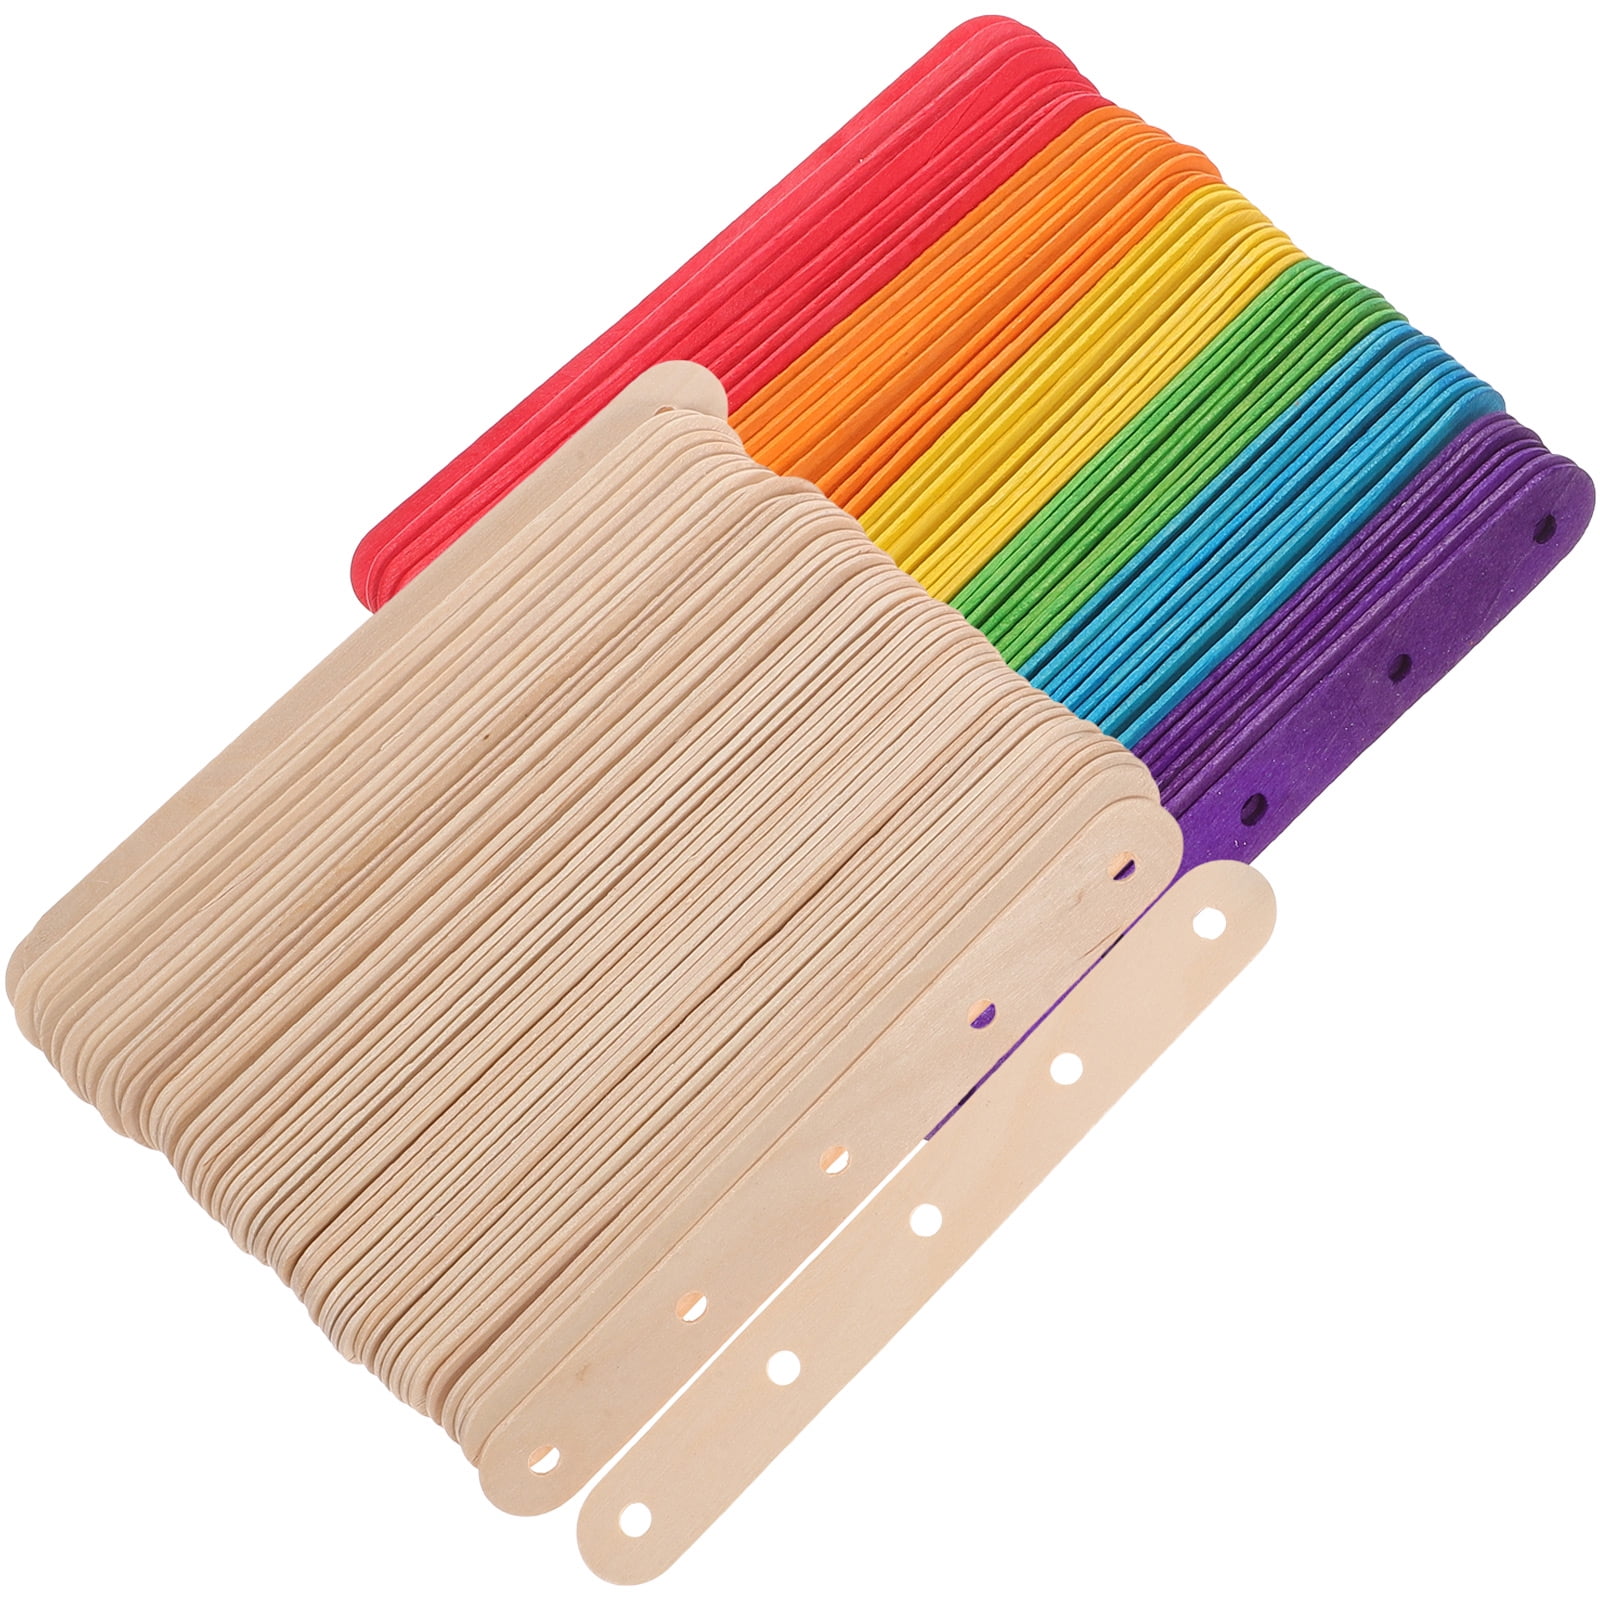 Wholesale 70pk Multicolor Wooden Craft Sticks NATURAL